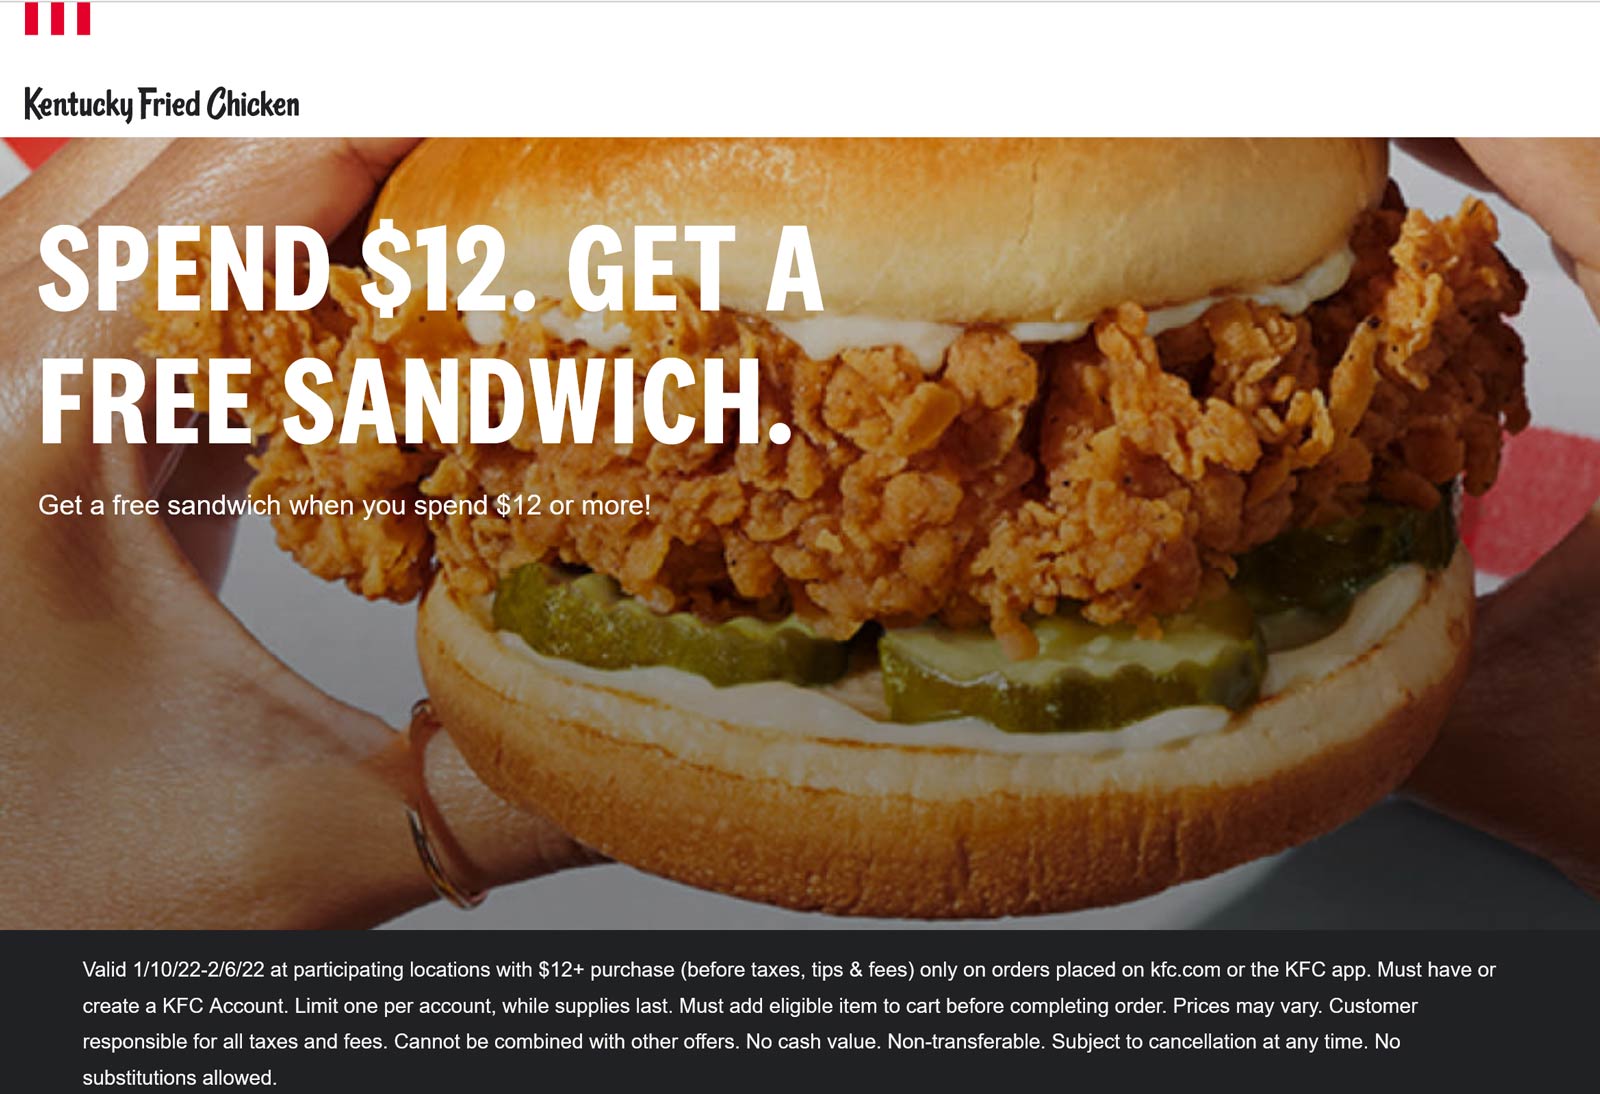 KFC restaurants Coupon  Free chicken sandwich with $12 spent online at KFC #kfc 